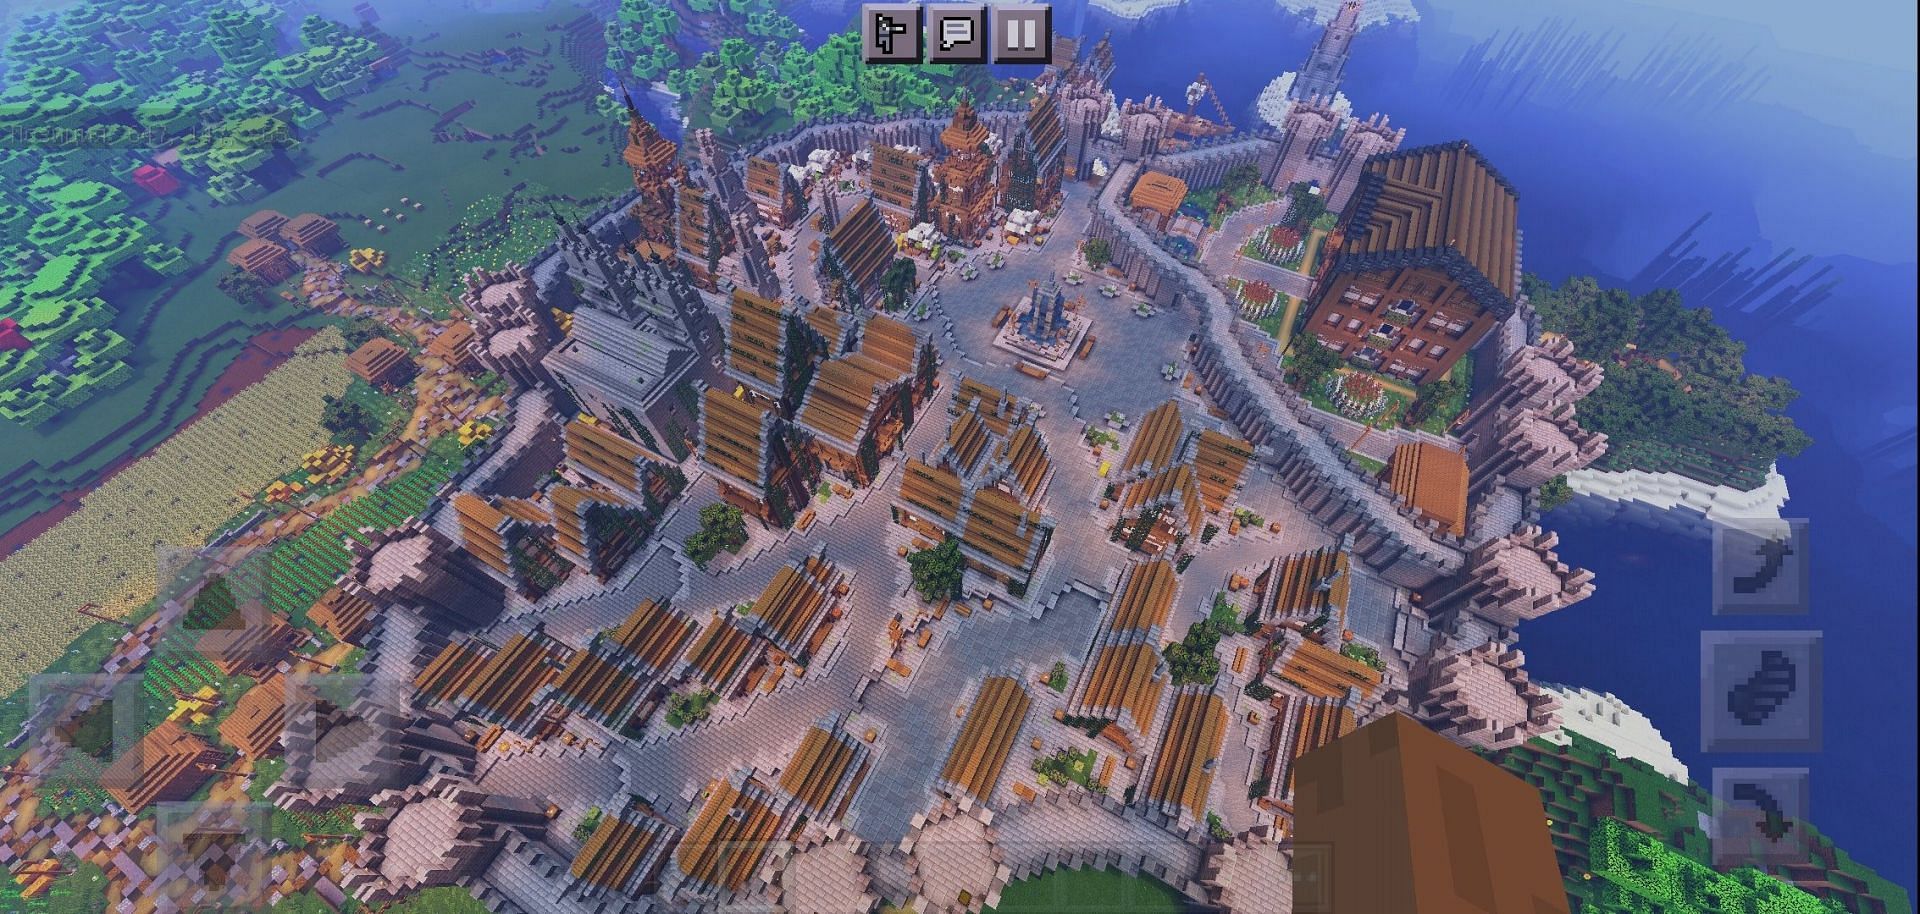 Medieval town(Image via u/exxidro on Reddit)